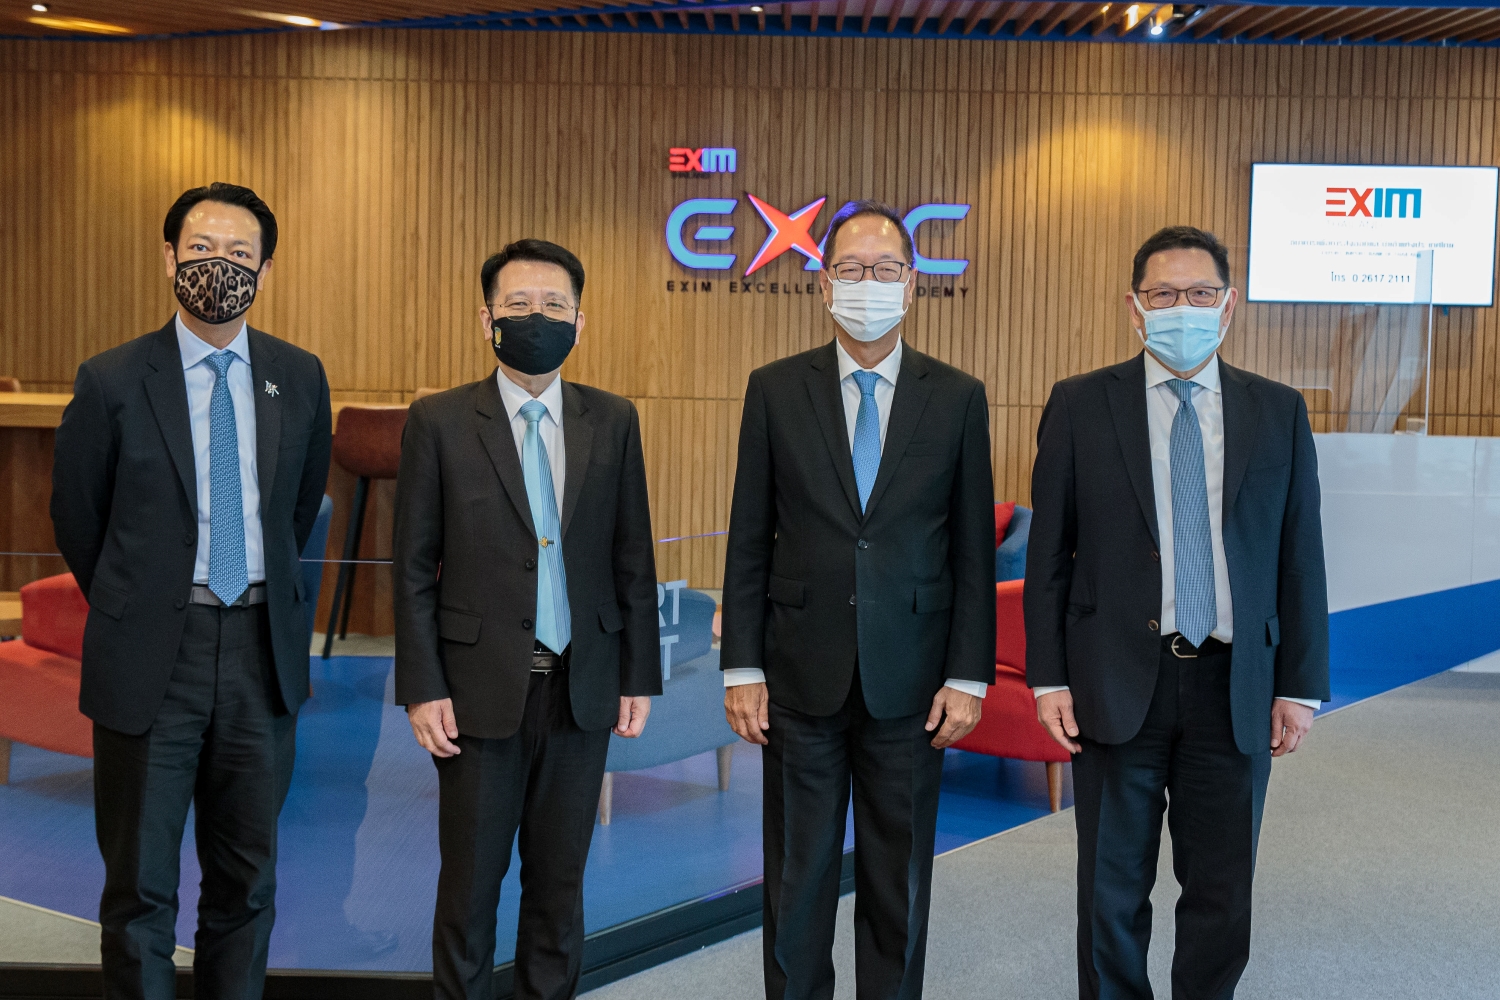 EXIM Thailand’s New Chairman and Directors Visit EXIM Thailand’s Facilities